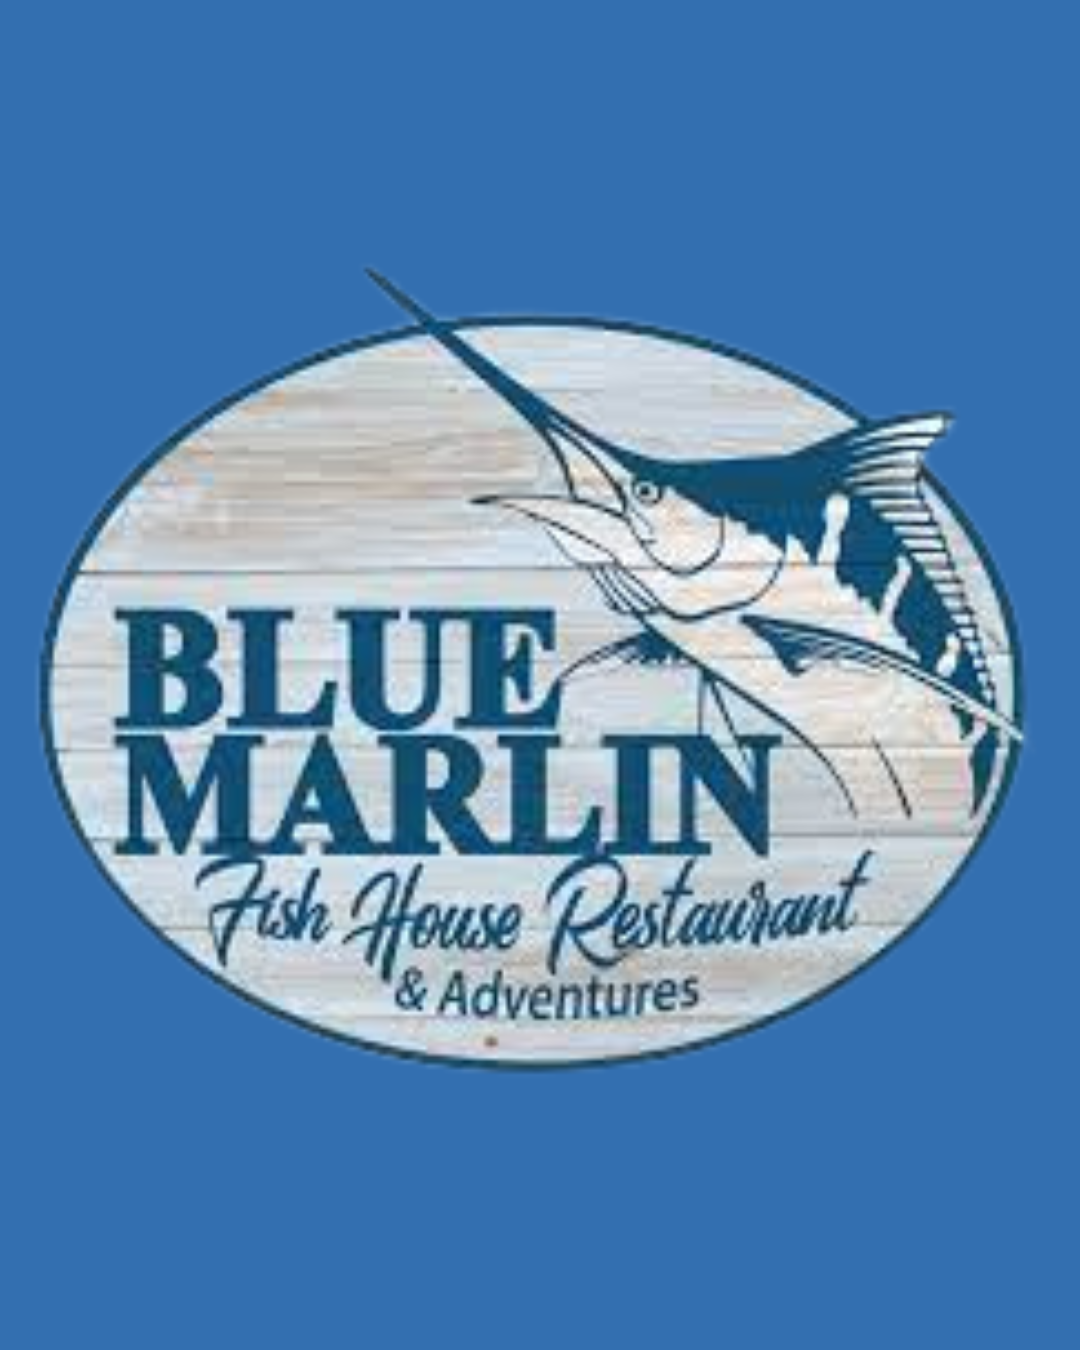 BLUE MARLIN FISH HOUSE